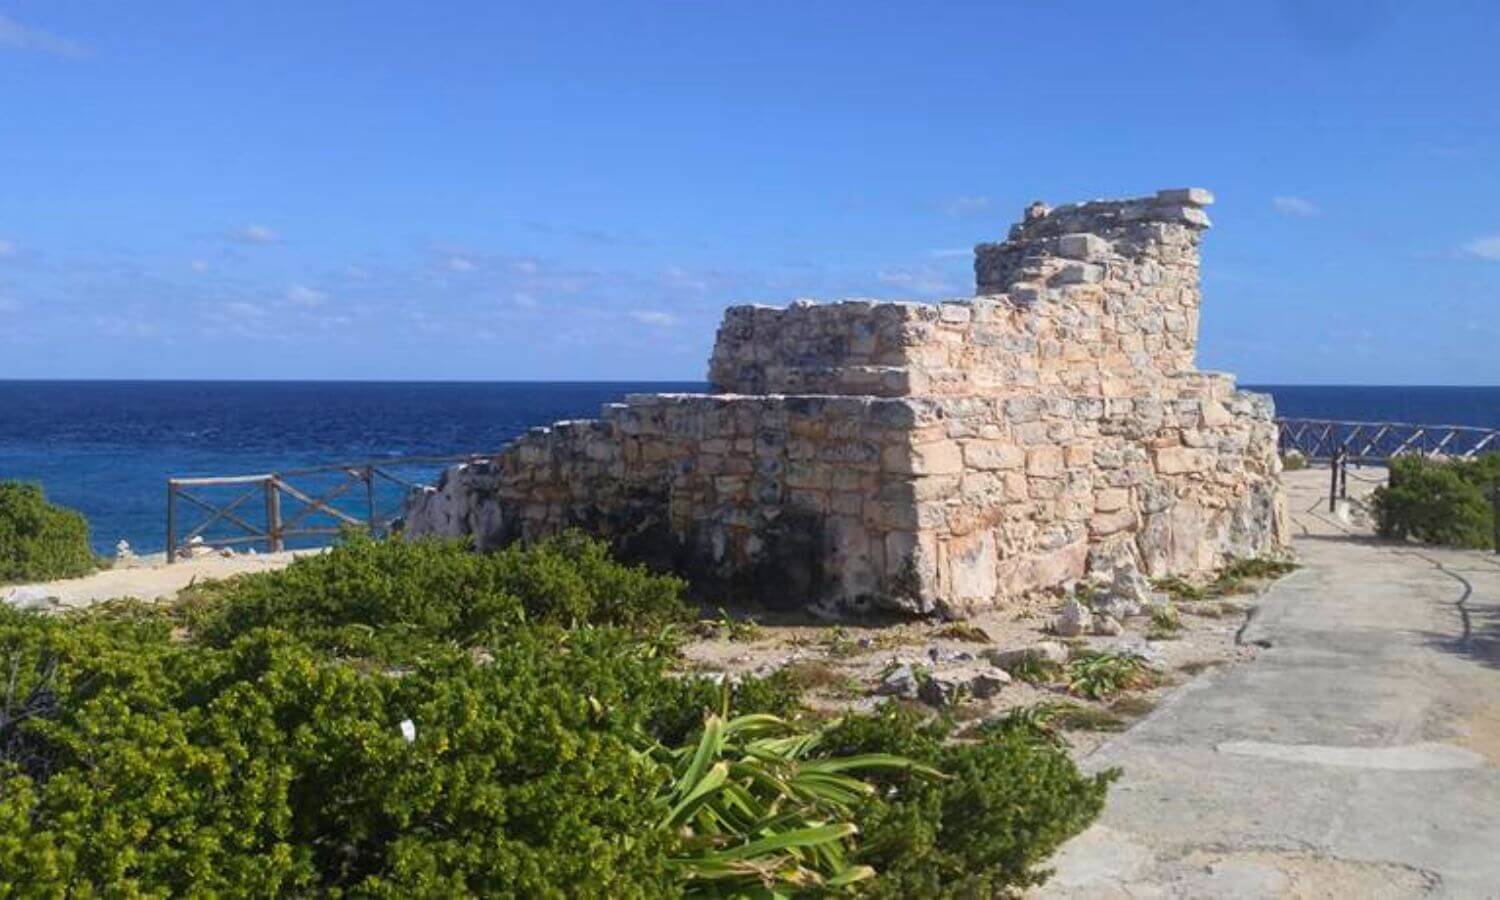 Mayan ruins overlooking the ocean on Isla Mujeres